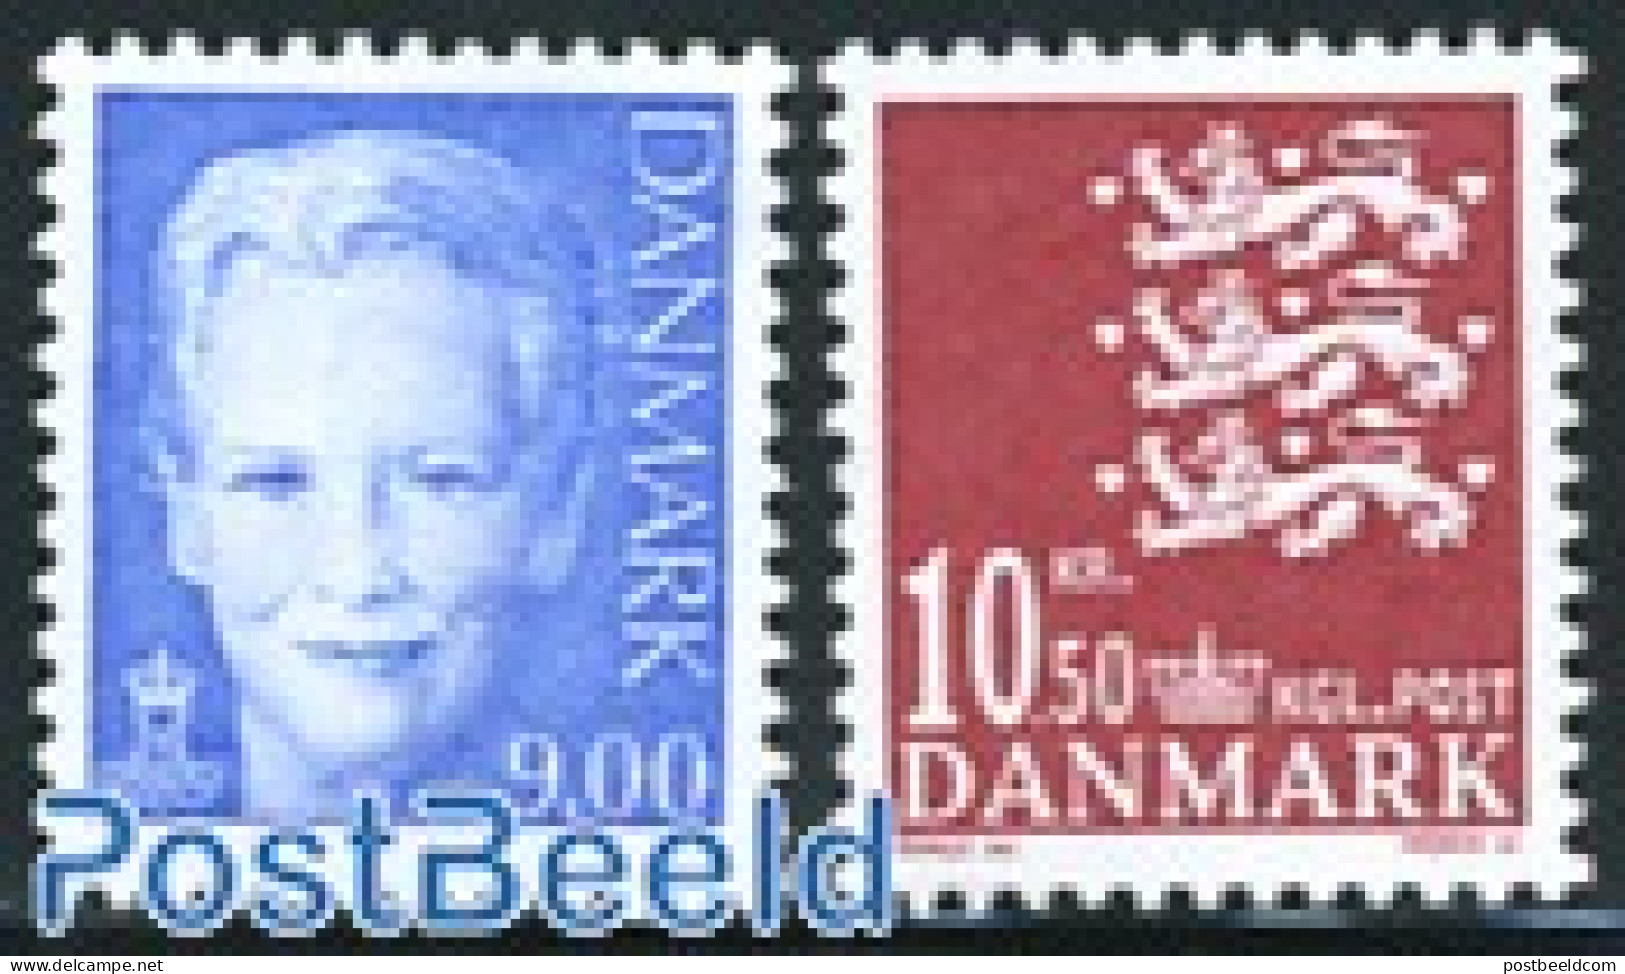 Denmark 2009 Definitives 2v, Mint NH - Neufs